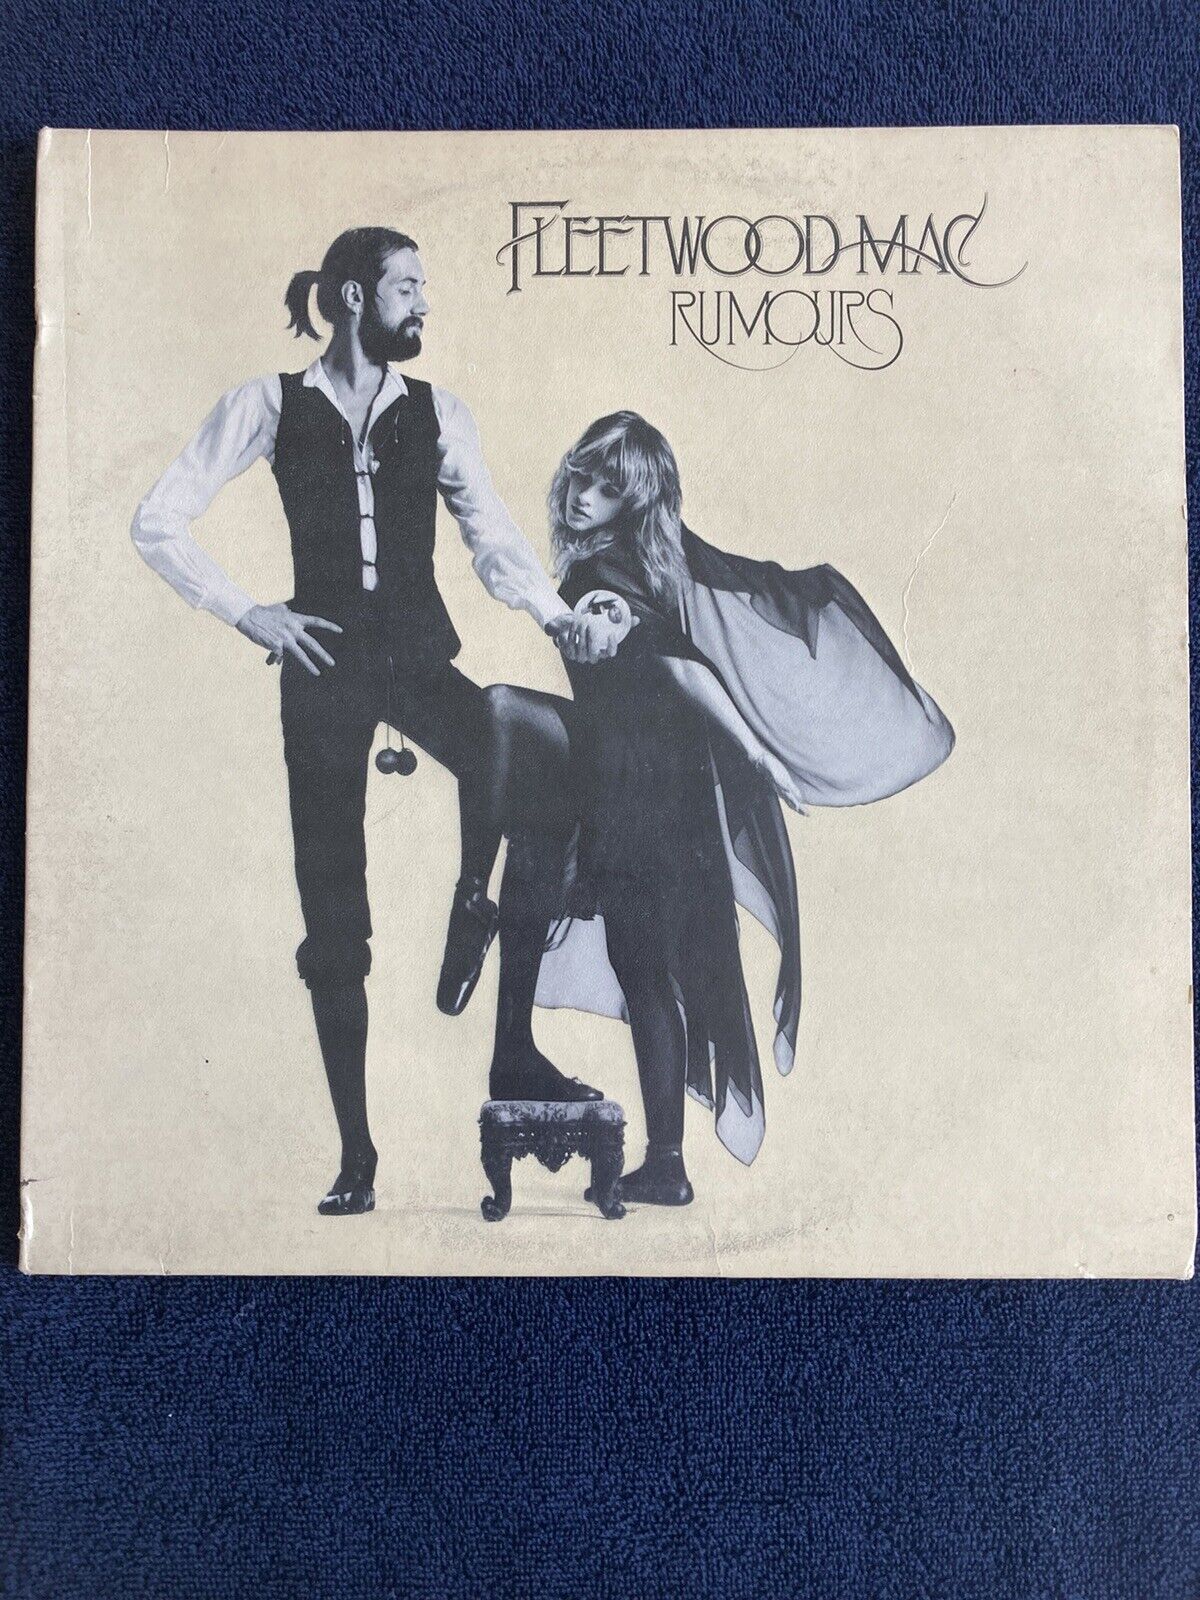 FLEETWOOD MAC~ Rumours. 1977 Vinyl LP. Vg++ Clean Playing Copy  Swift Shipping